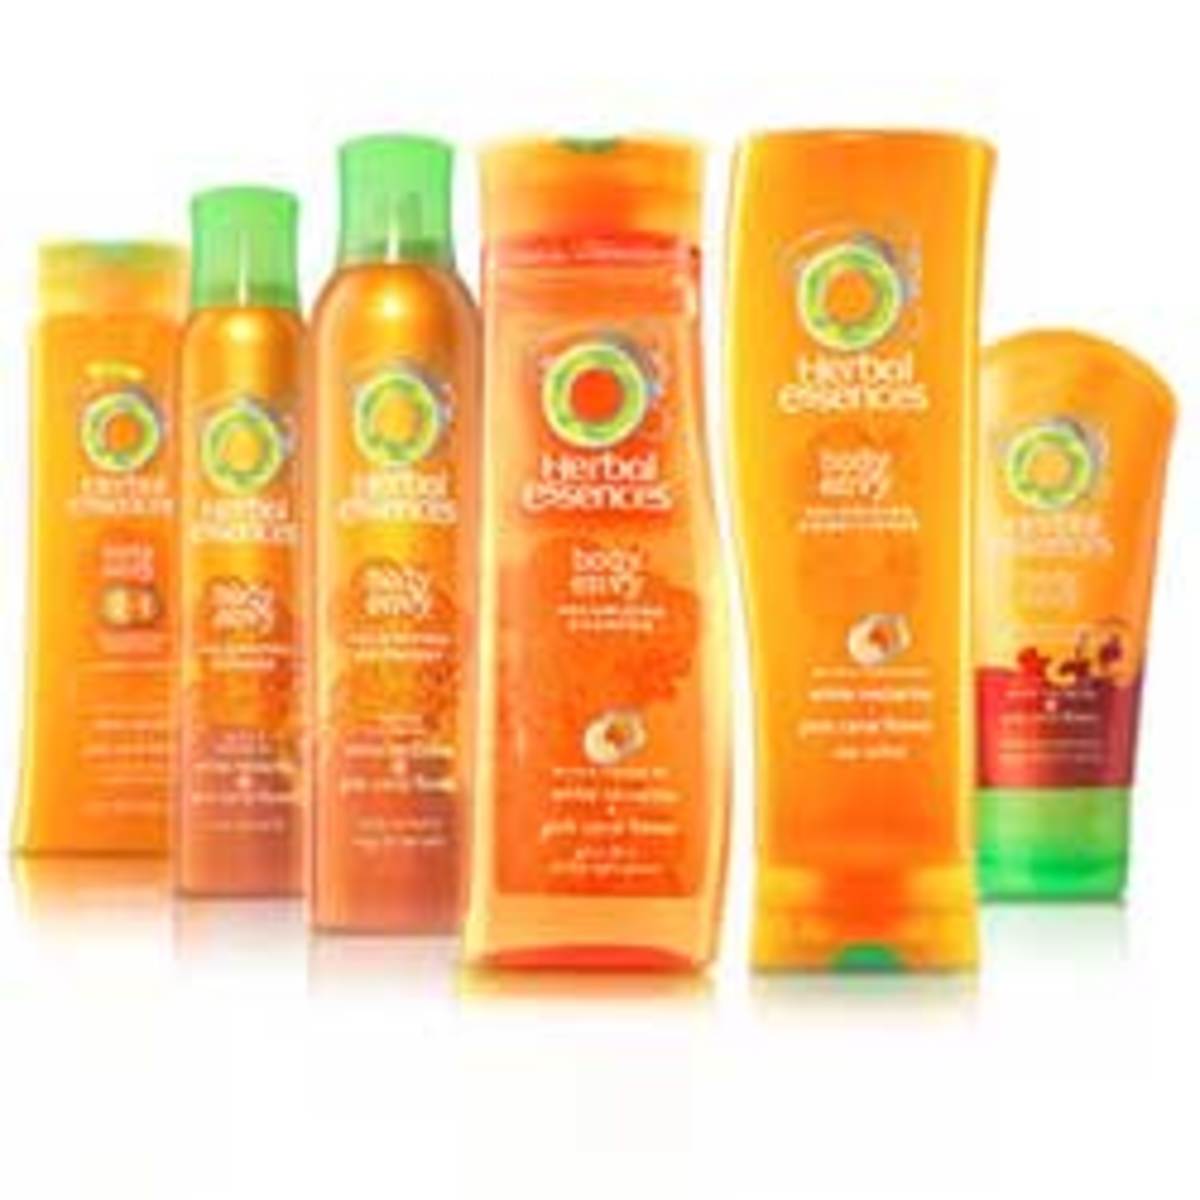 herbal-essences-shampoo-products